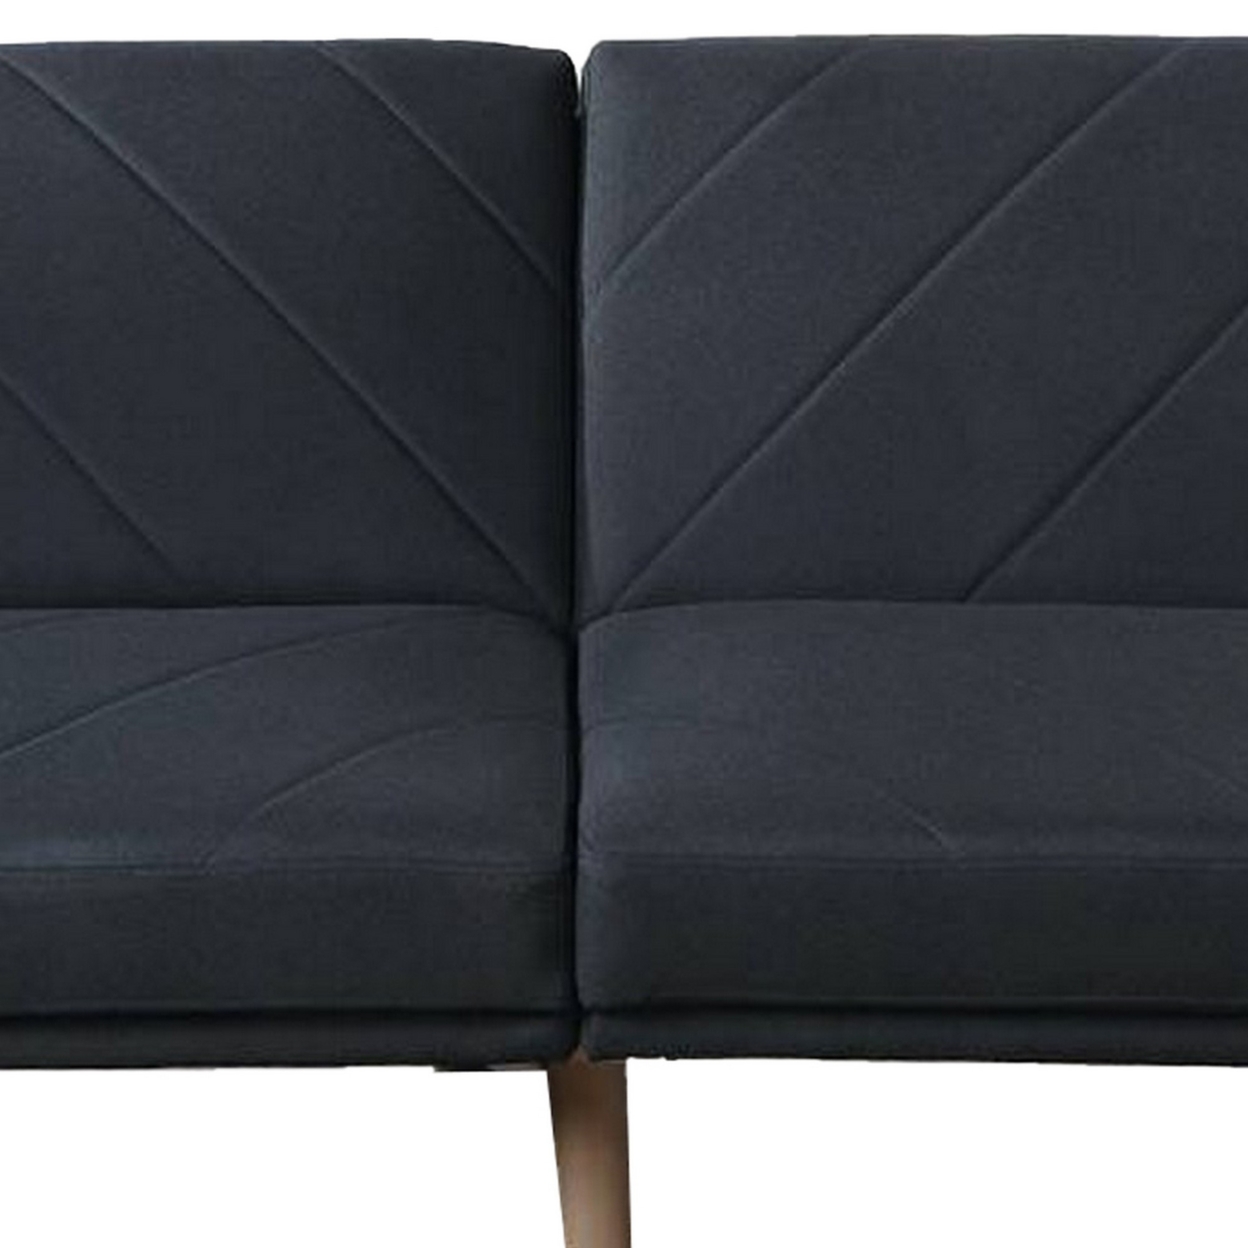 Fabric Adjustable Sofa With Chevron Pattern And Splayed Legs, Black- Saltoro Sherpi